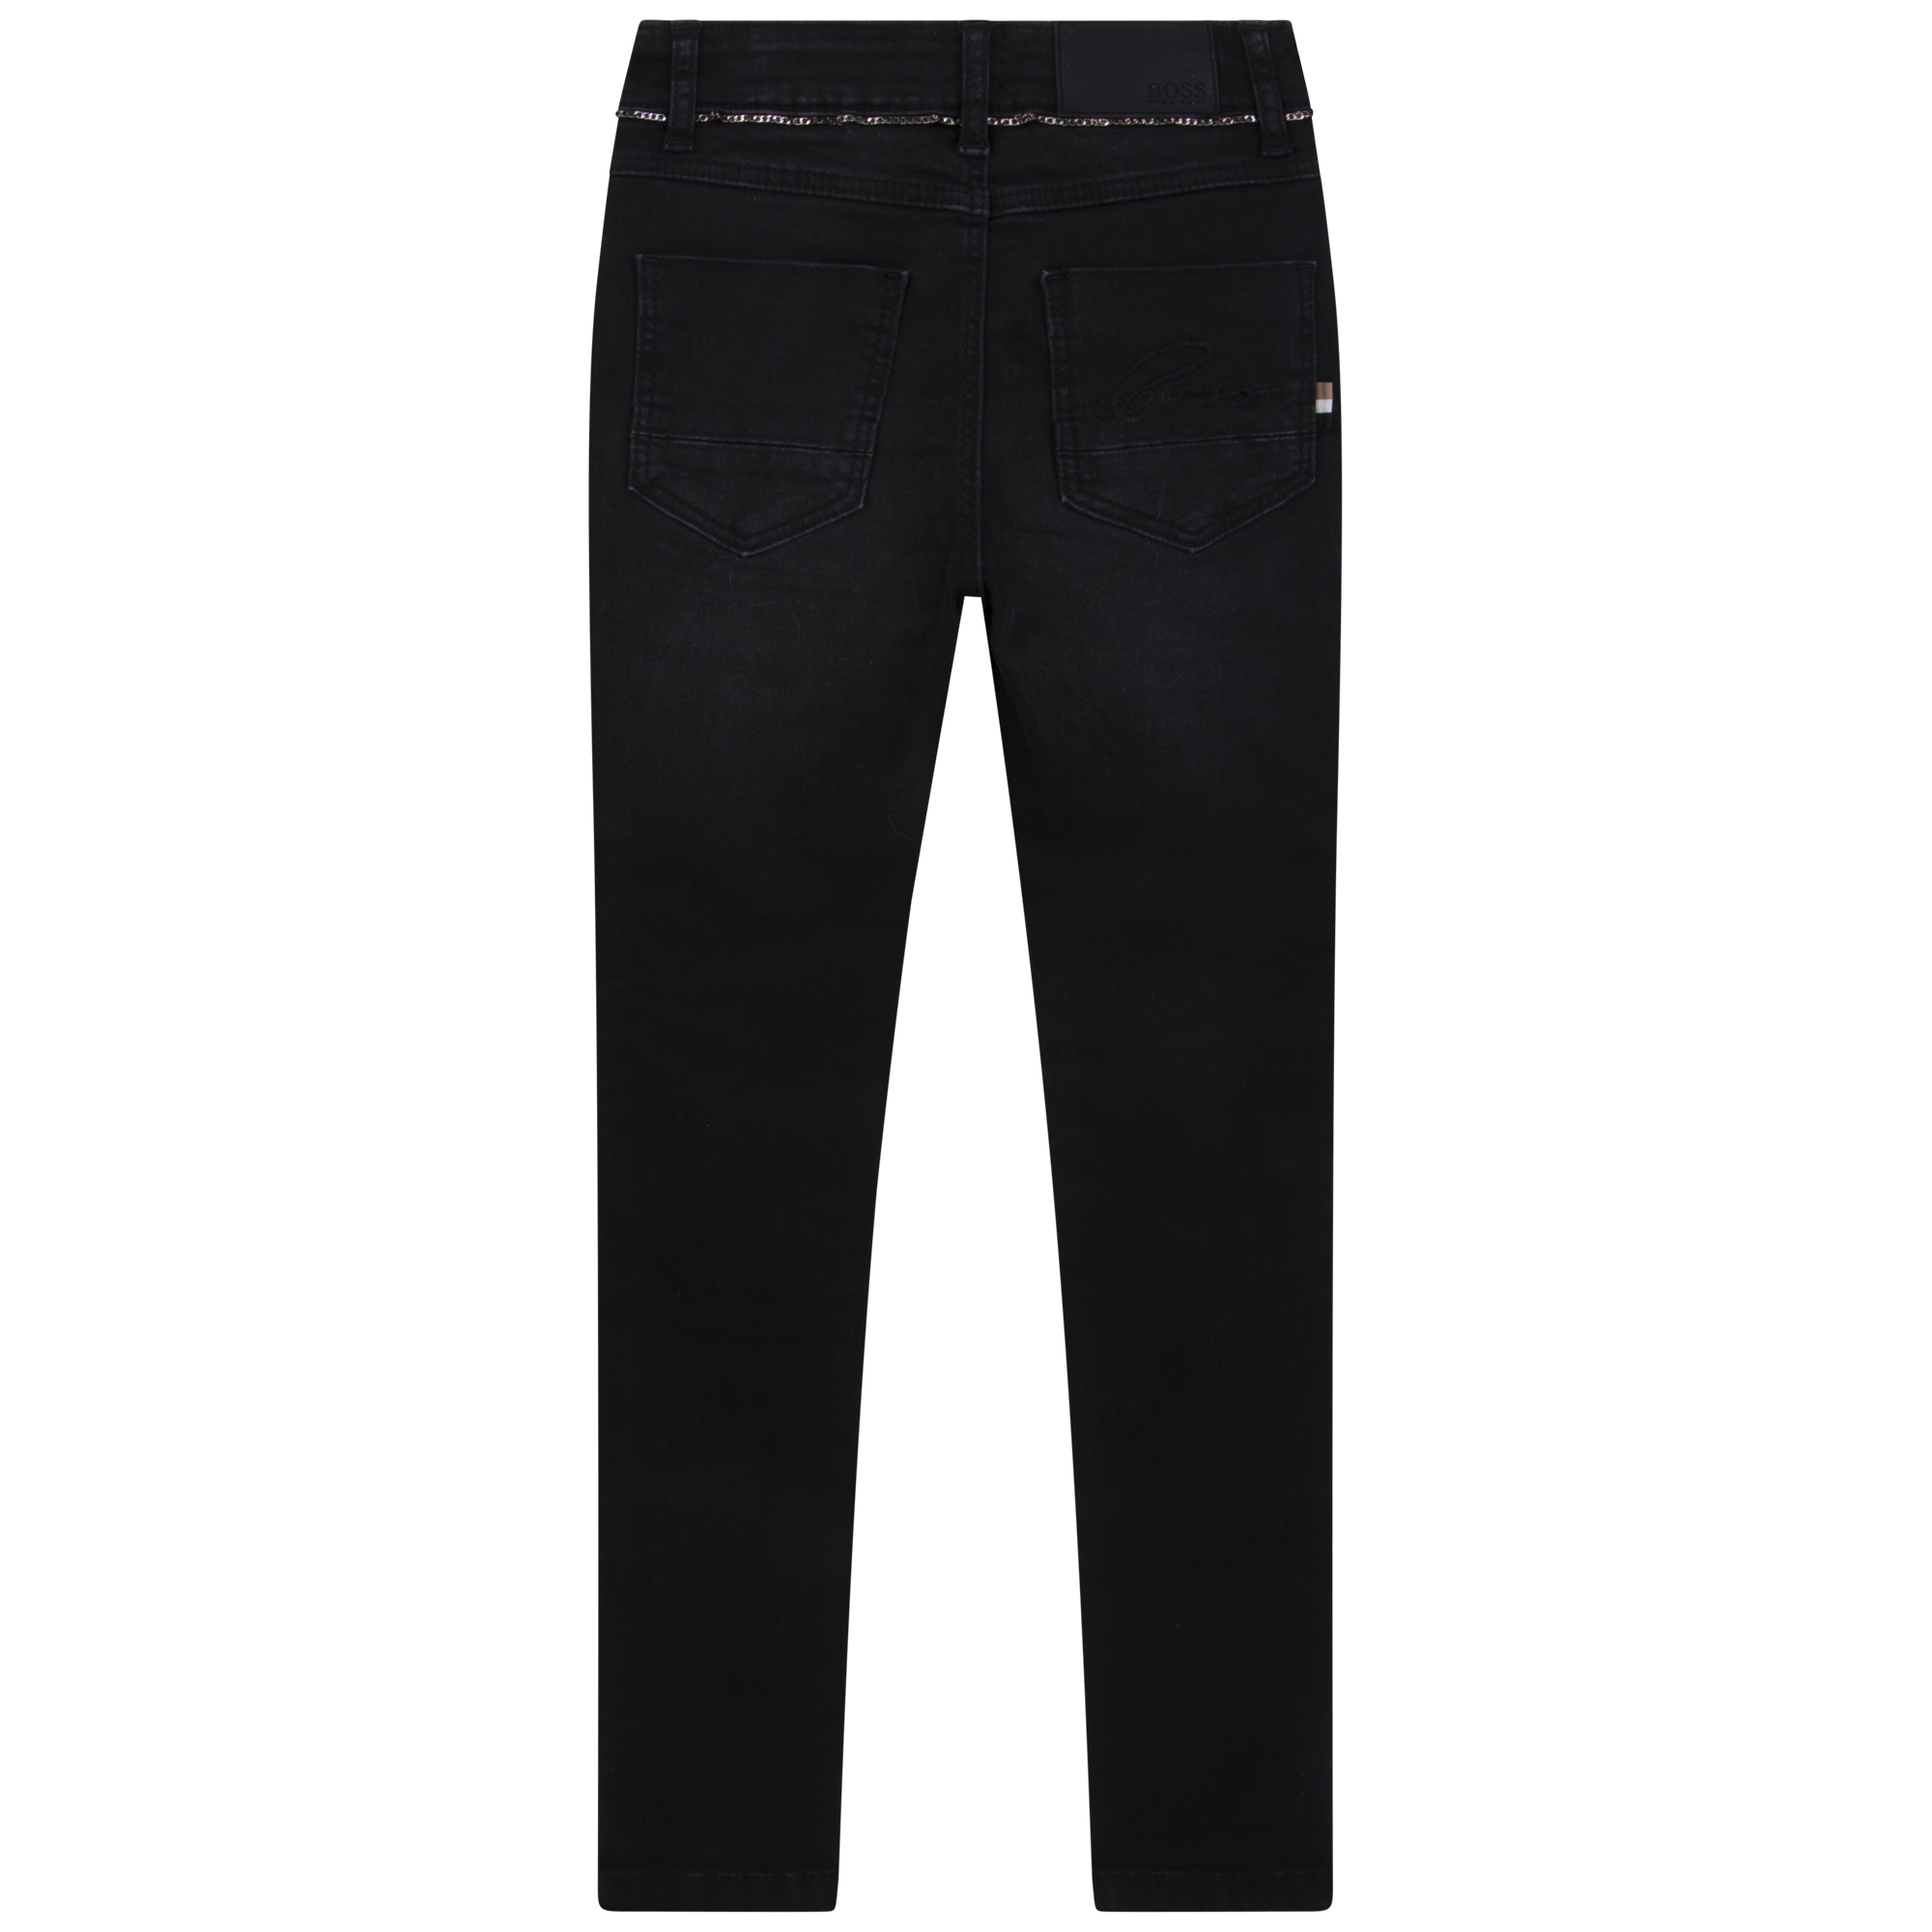 Stretch 5-pocket jeans BOSS for GIRL